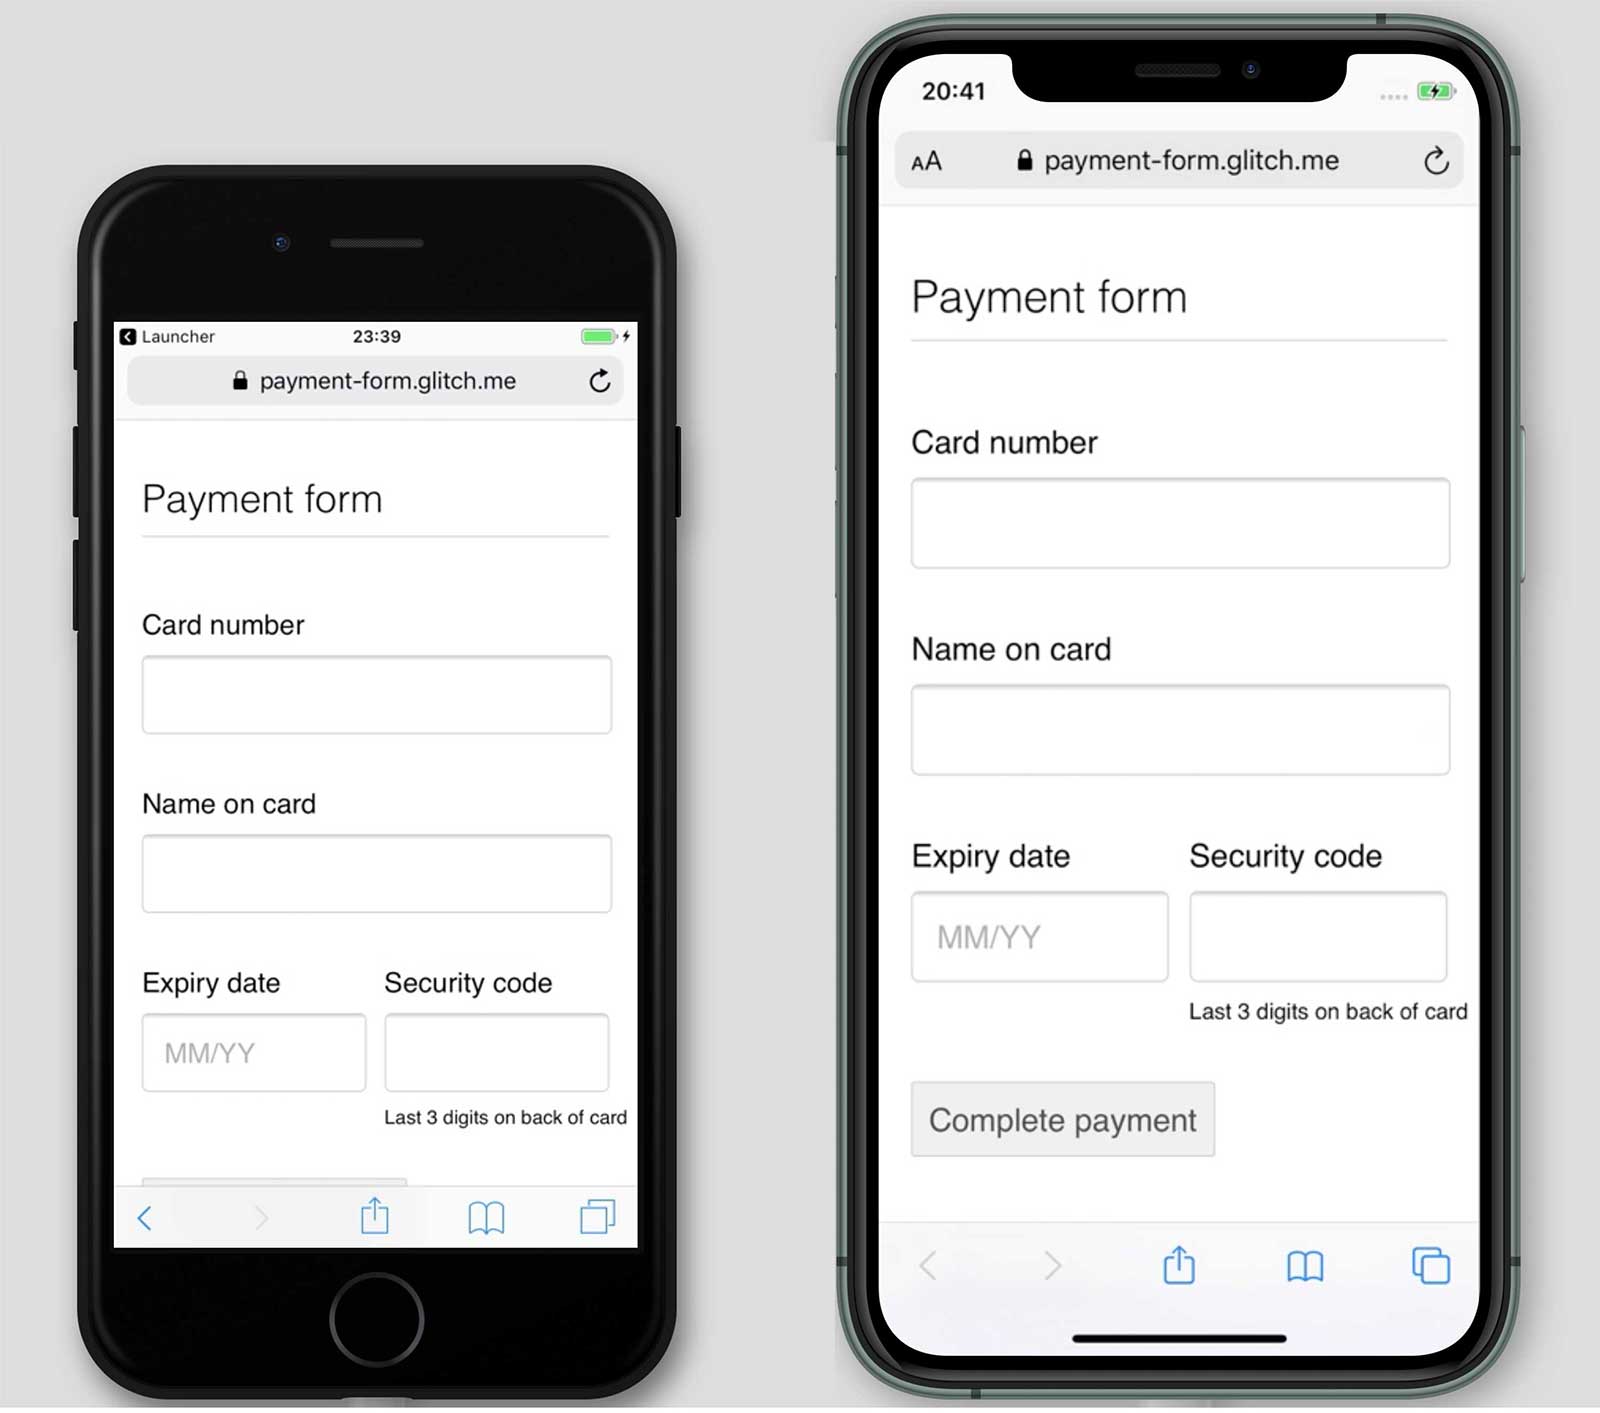 iPhone 7 和 11 付款方式為 payment-form.glitch.me 的螢幕截圖。iPhone 11 上顯示了「完成付款」按鈕，但不會顯示 7